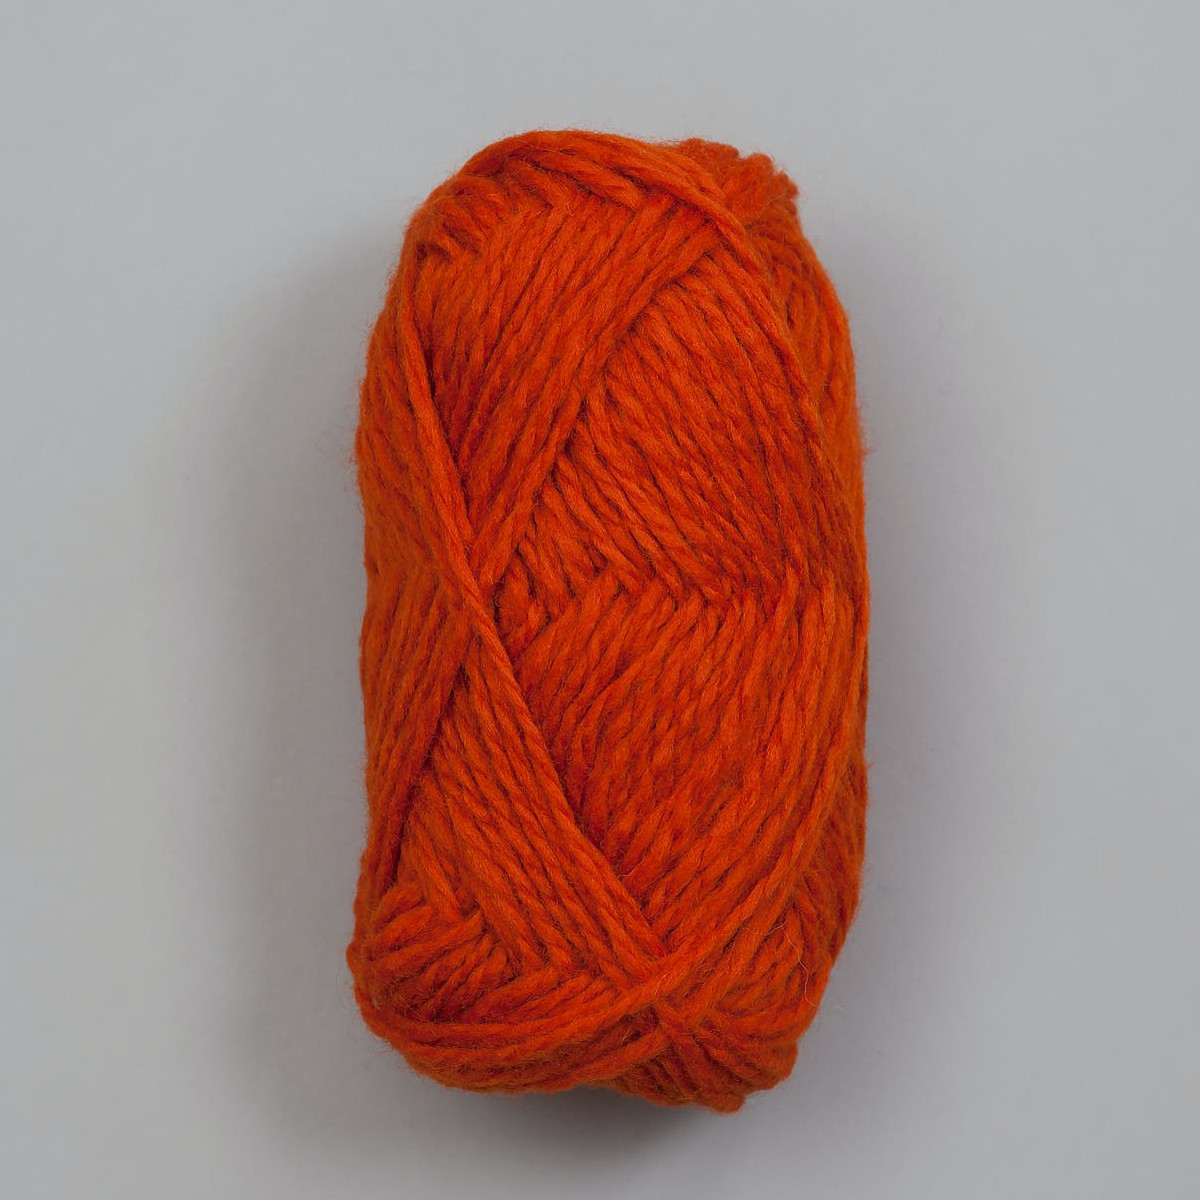 Vams - Mørk oransje / Dunkelorange (61)